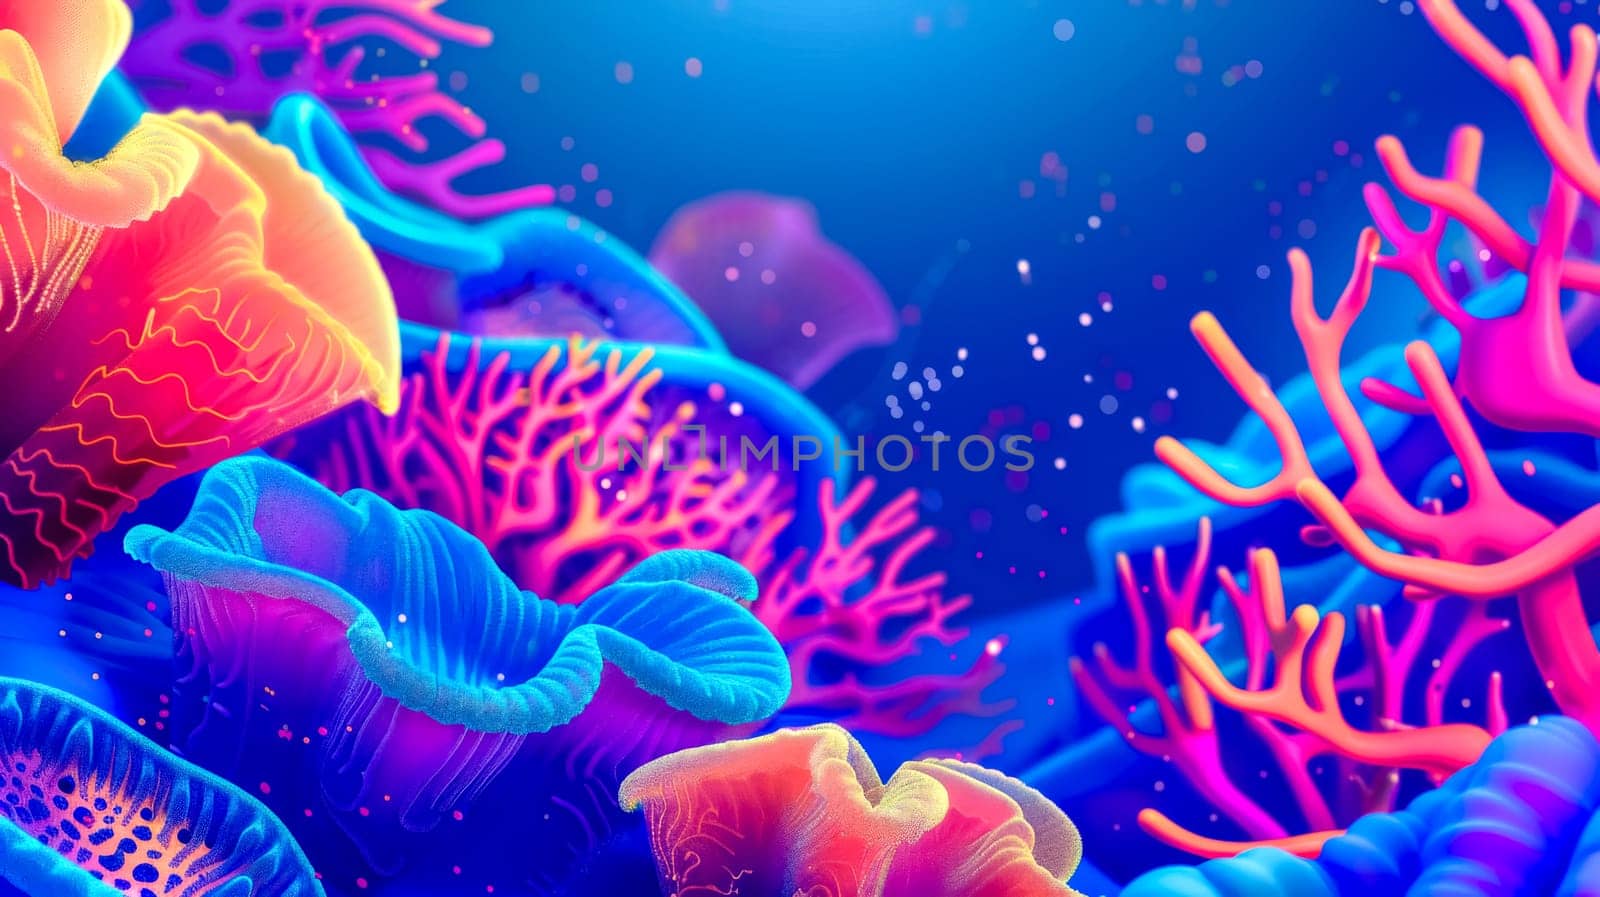 Vibrant underwater coral reef ecosystem illustration by Edophoto